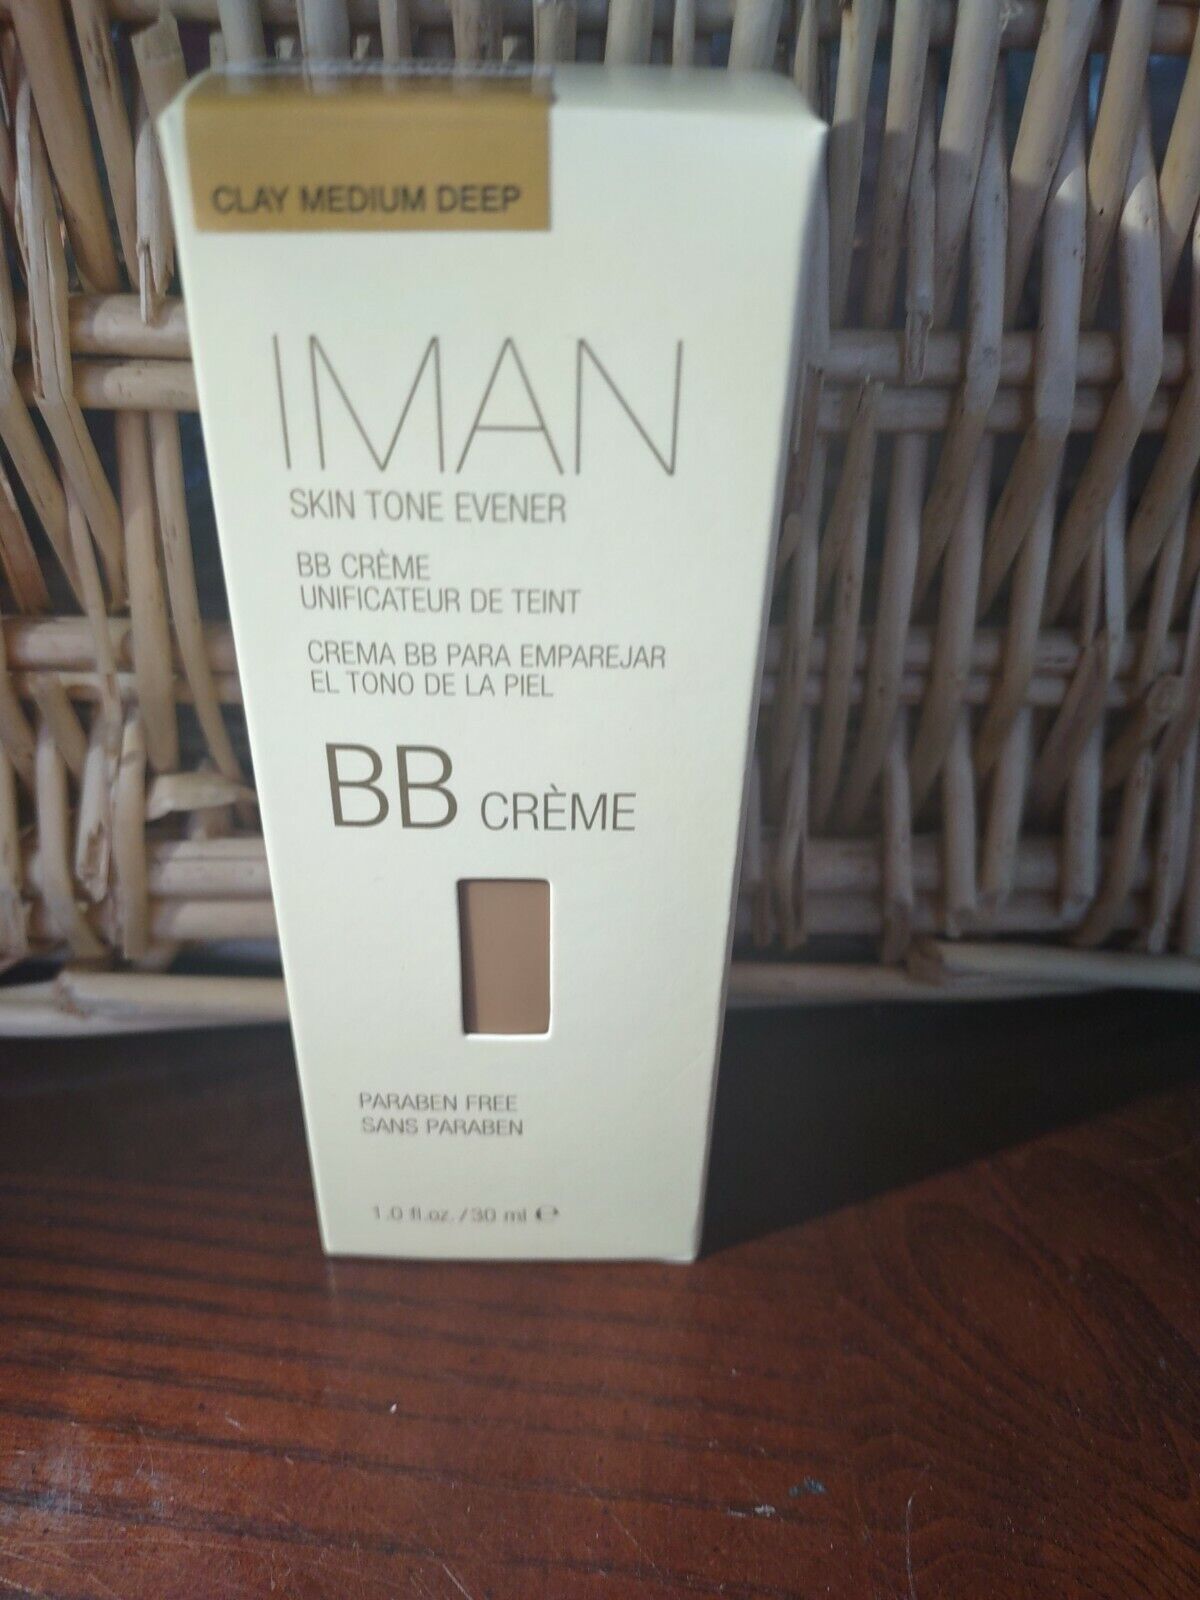 IMAN Skin Tone Evener BB Creme Clay Medium Deep-Brand New-SHIPS N 24 HOURS - $29.58